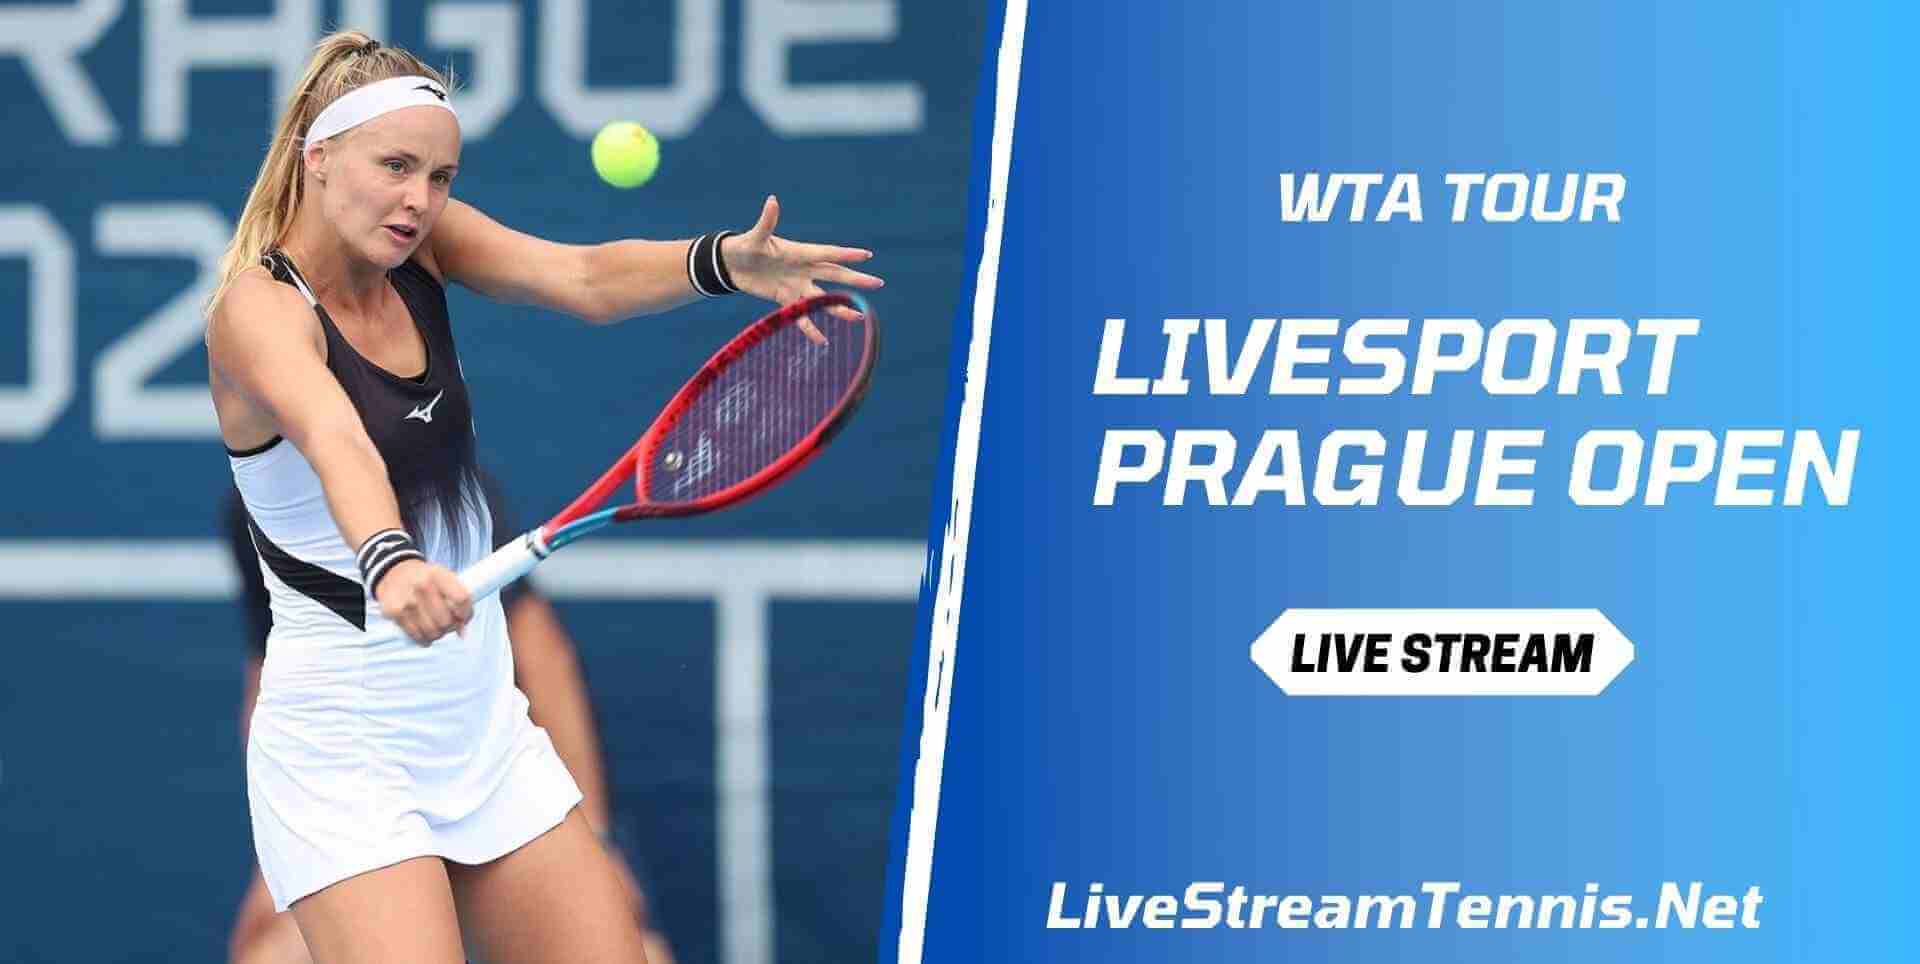 Livesport Prague Open WTA Live Stream Tennis